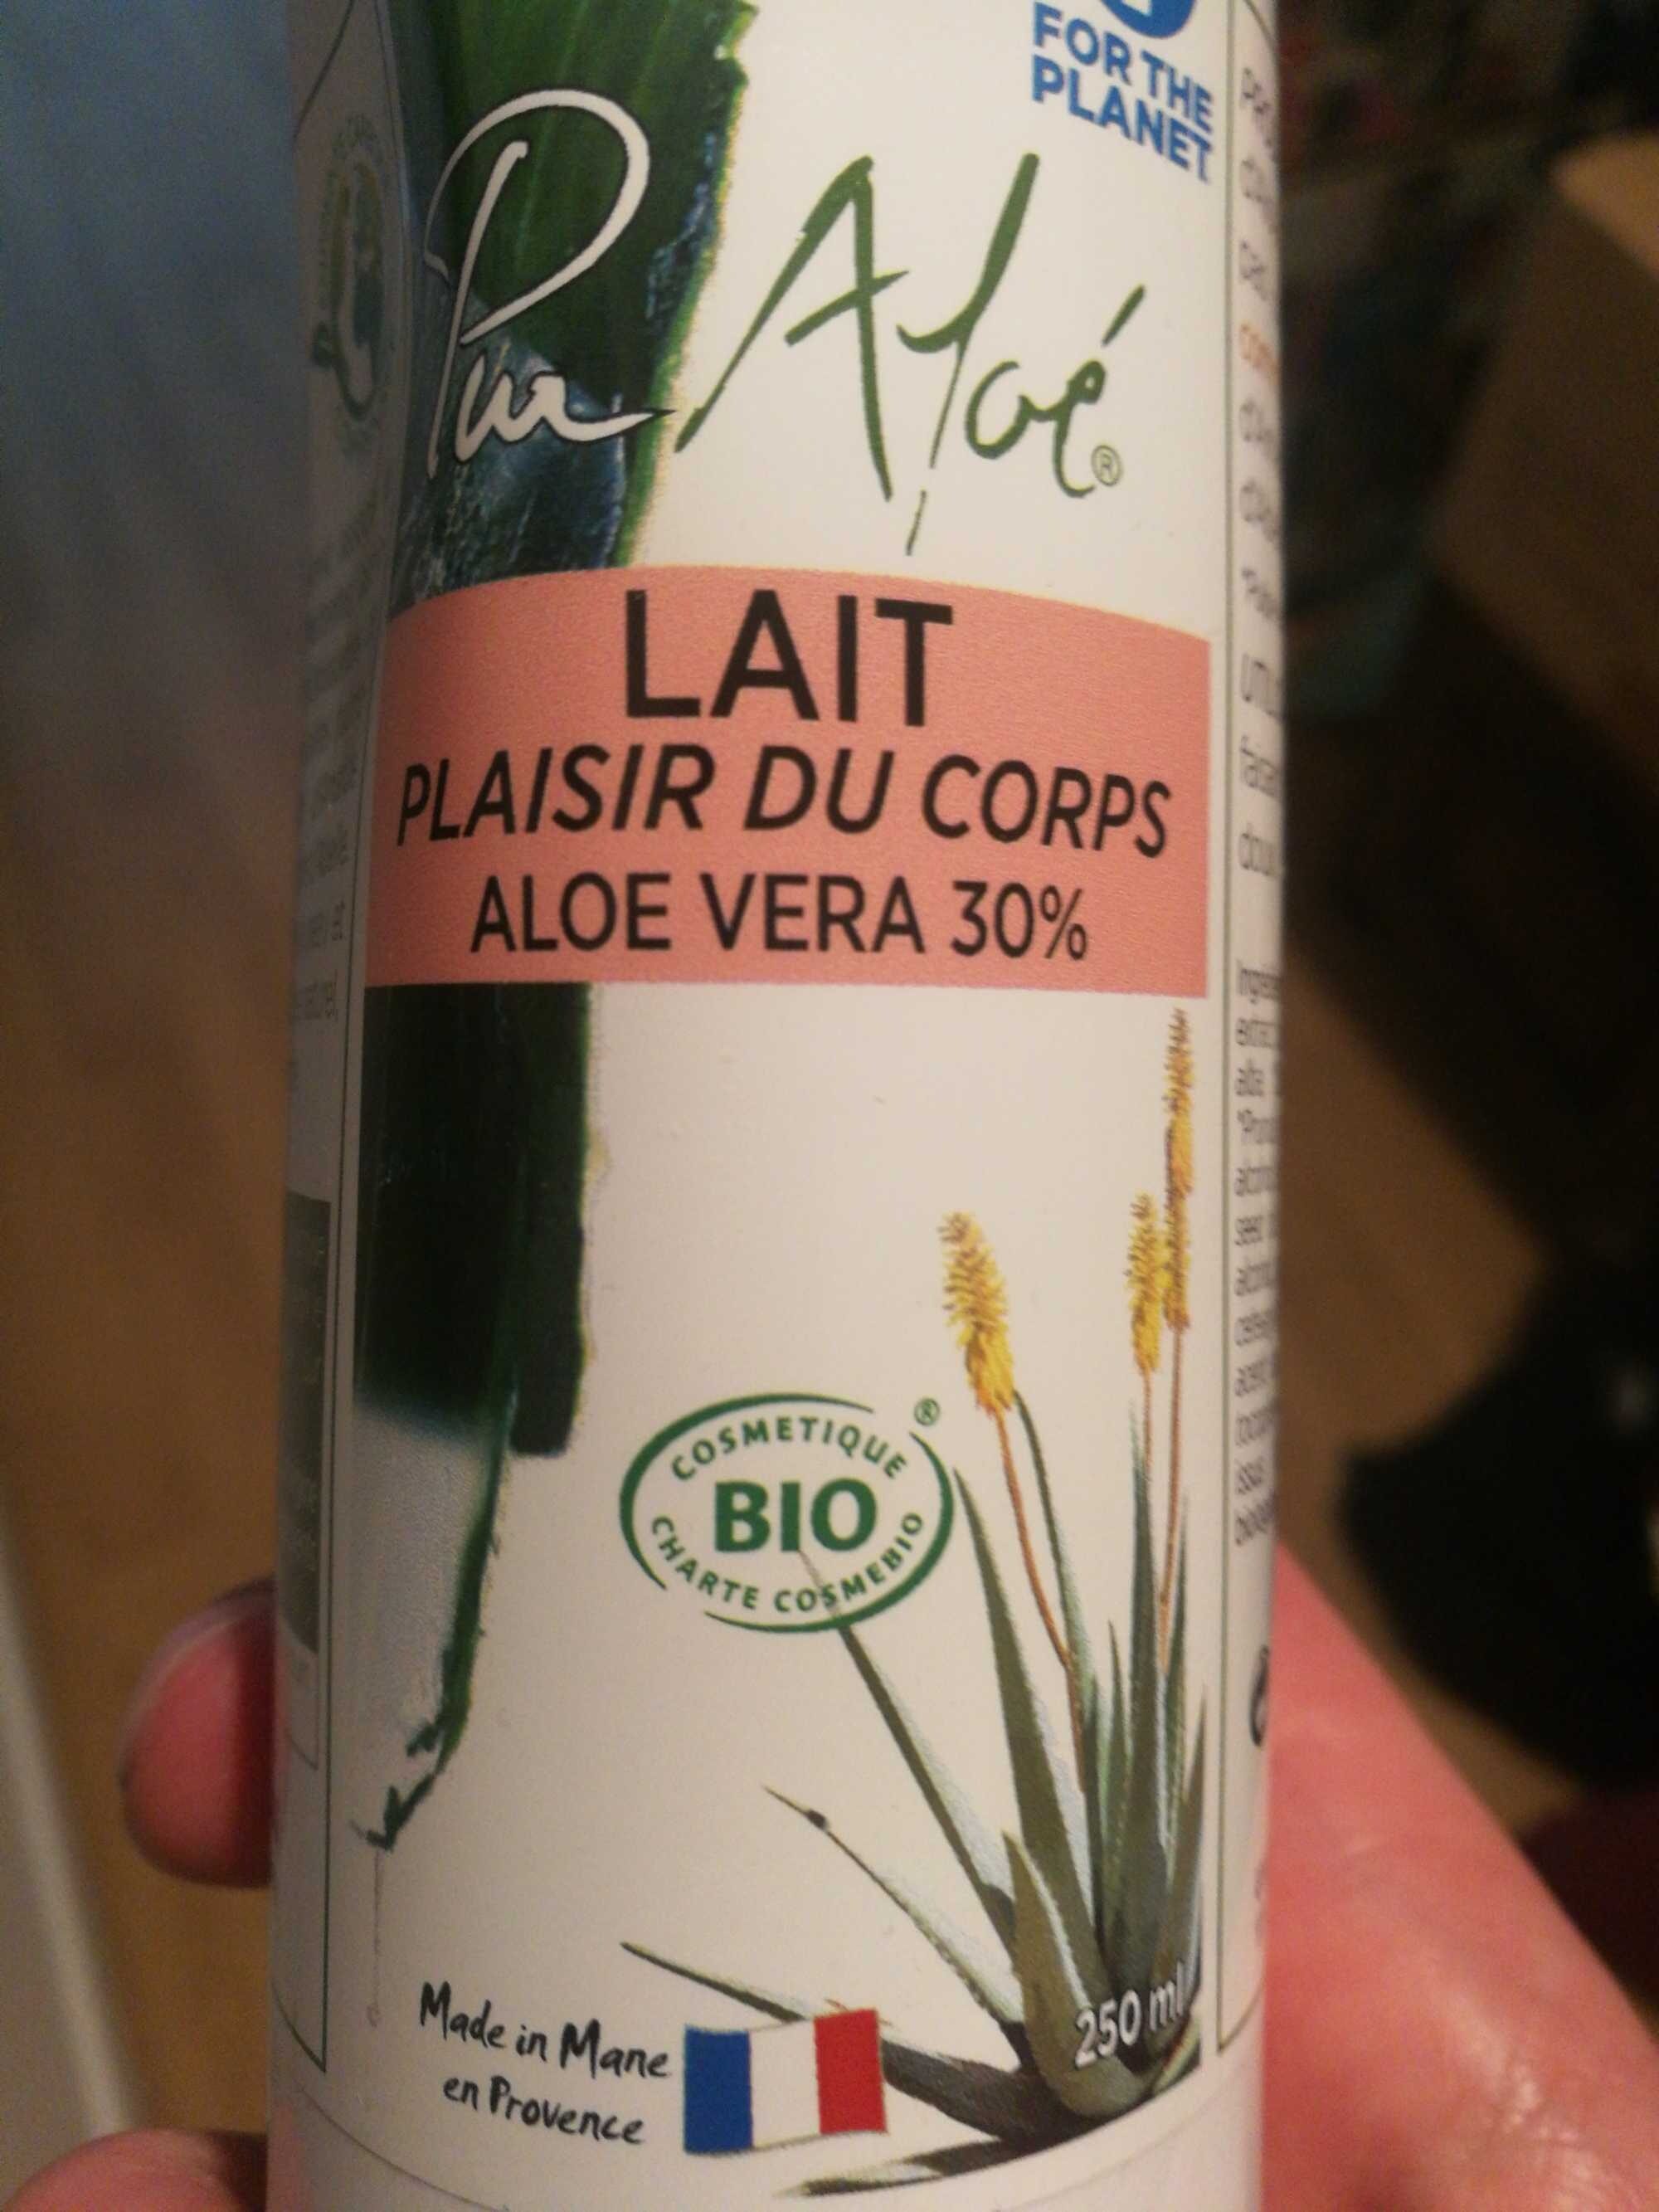 Lait plaisir du corps Aloe Vera 30% - מוצר - fr